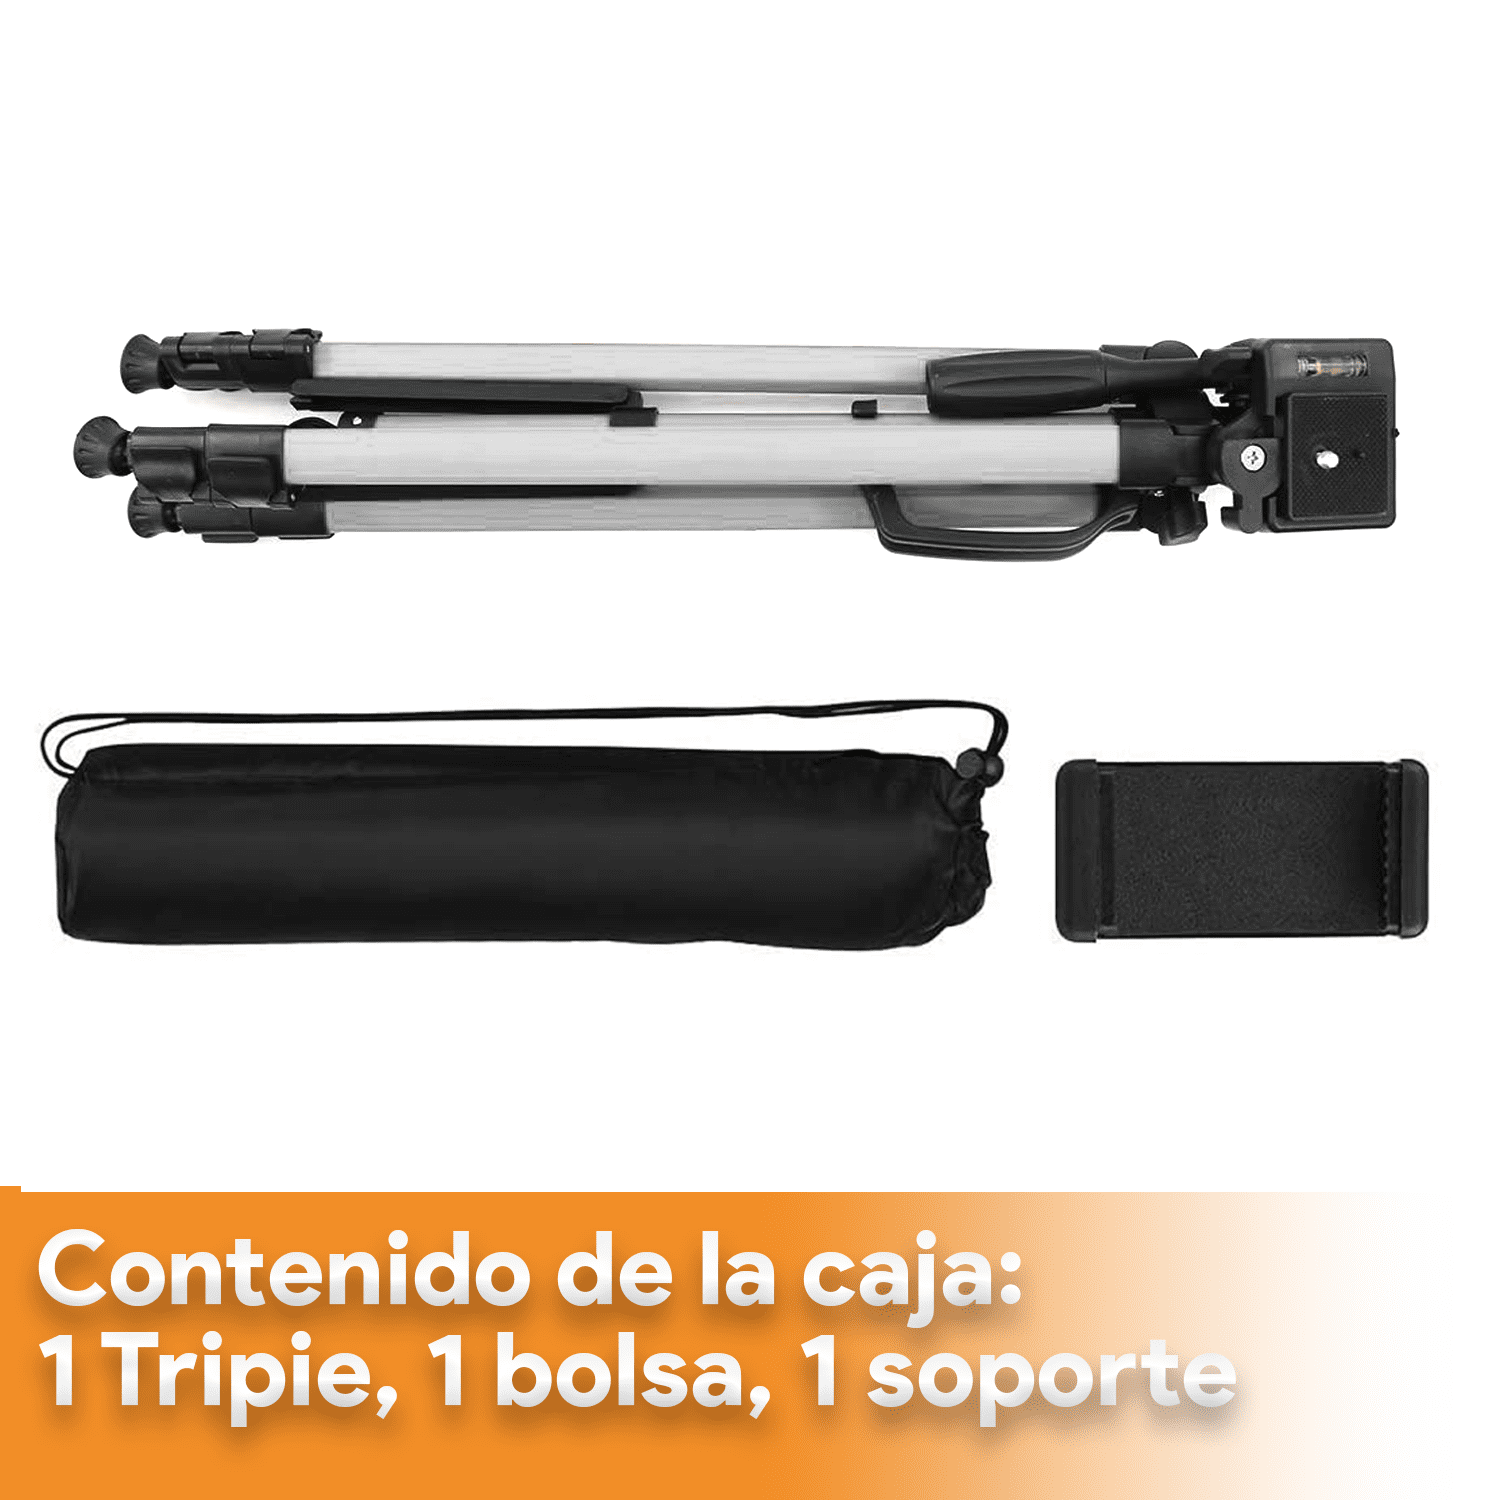 Tripie Universal Reforzado Archy de 140cm con Soporte Celular, agarradera, Nivelador y Bolsa de Almacenamiento (Zp80)